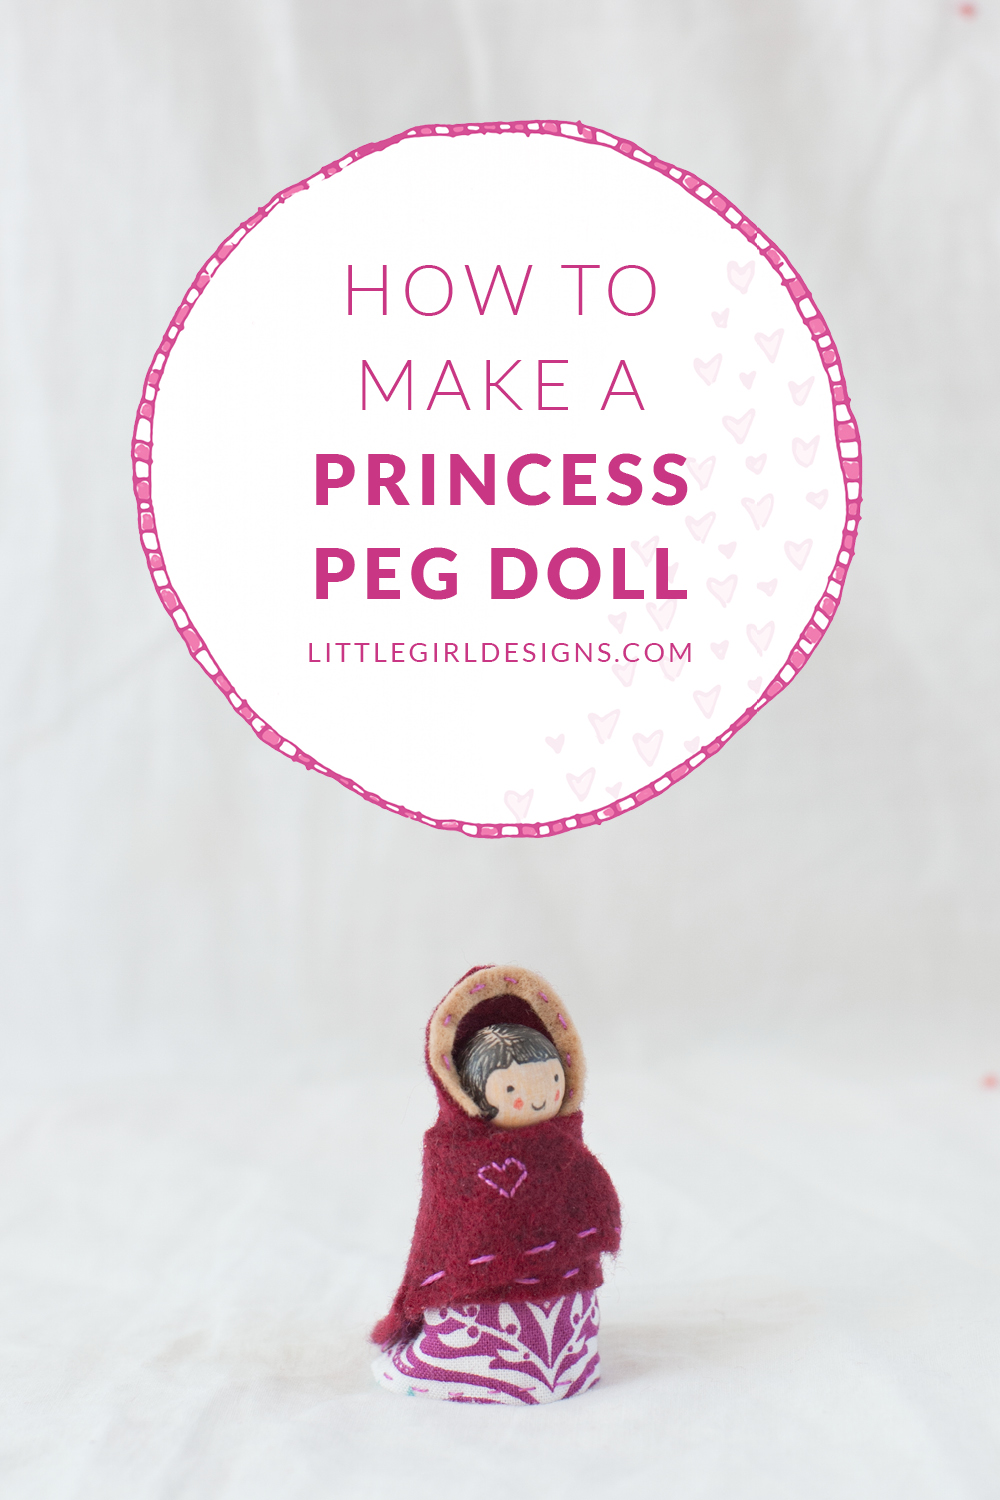 How to Make a Princess Peg Doll